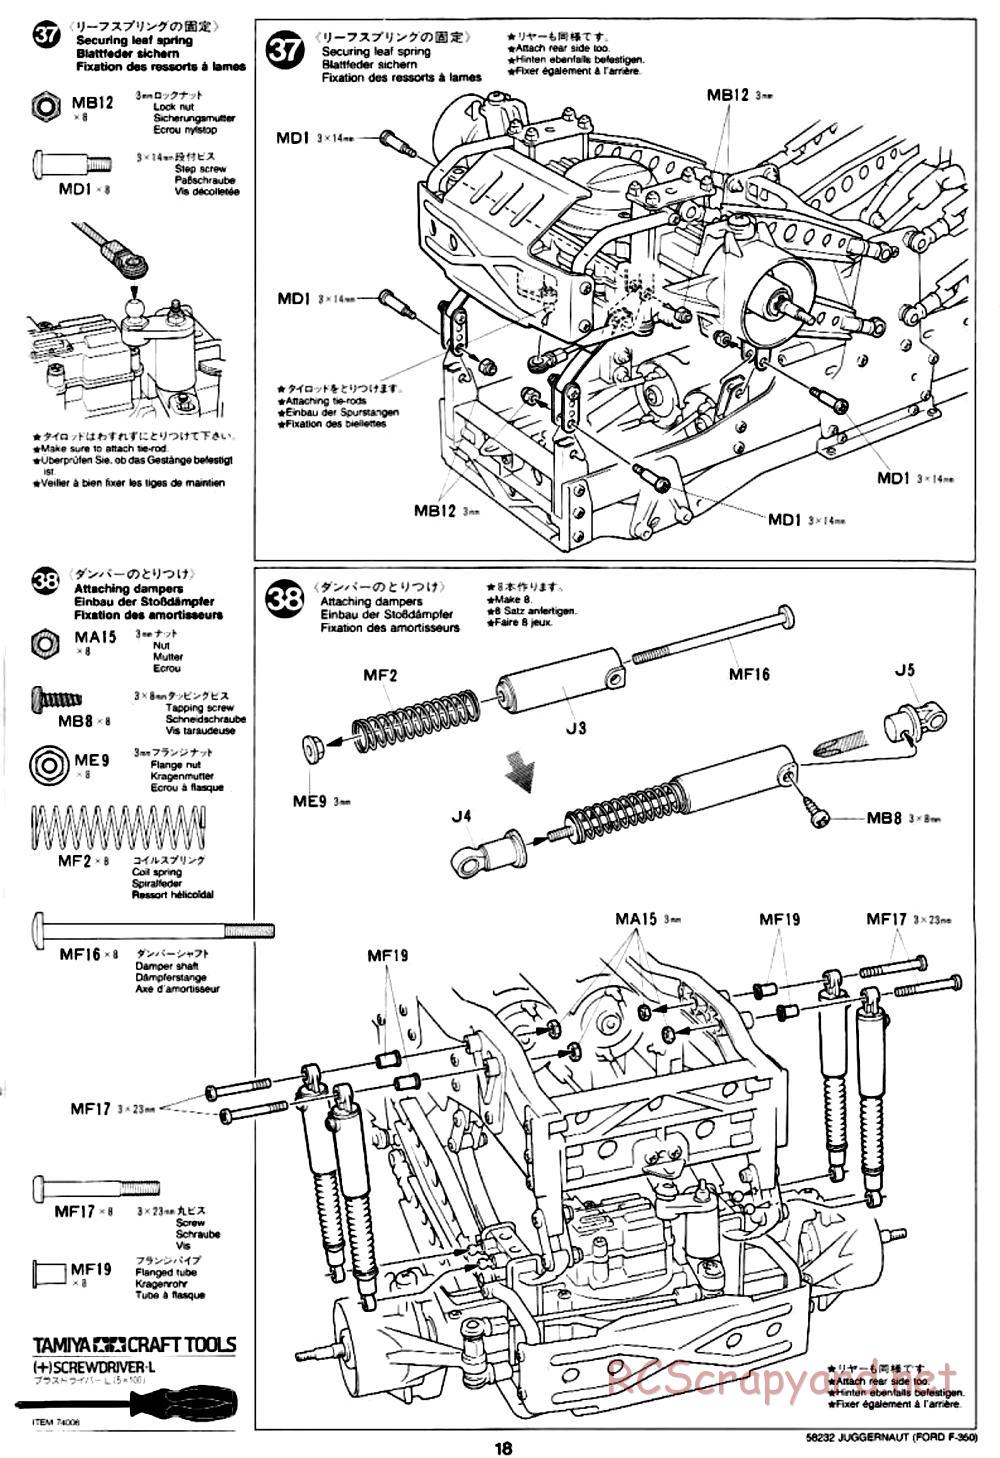 Tamiya - Juggernaut Chassis - Manual - Page 18